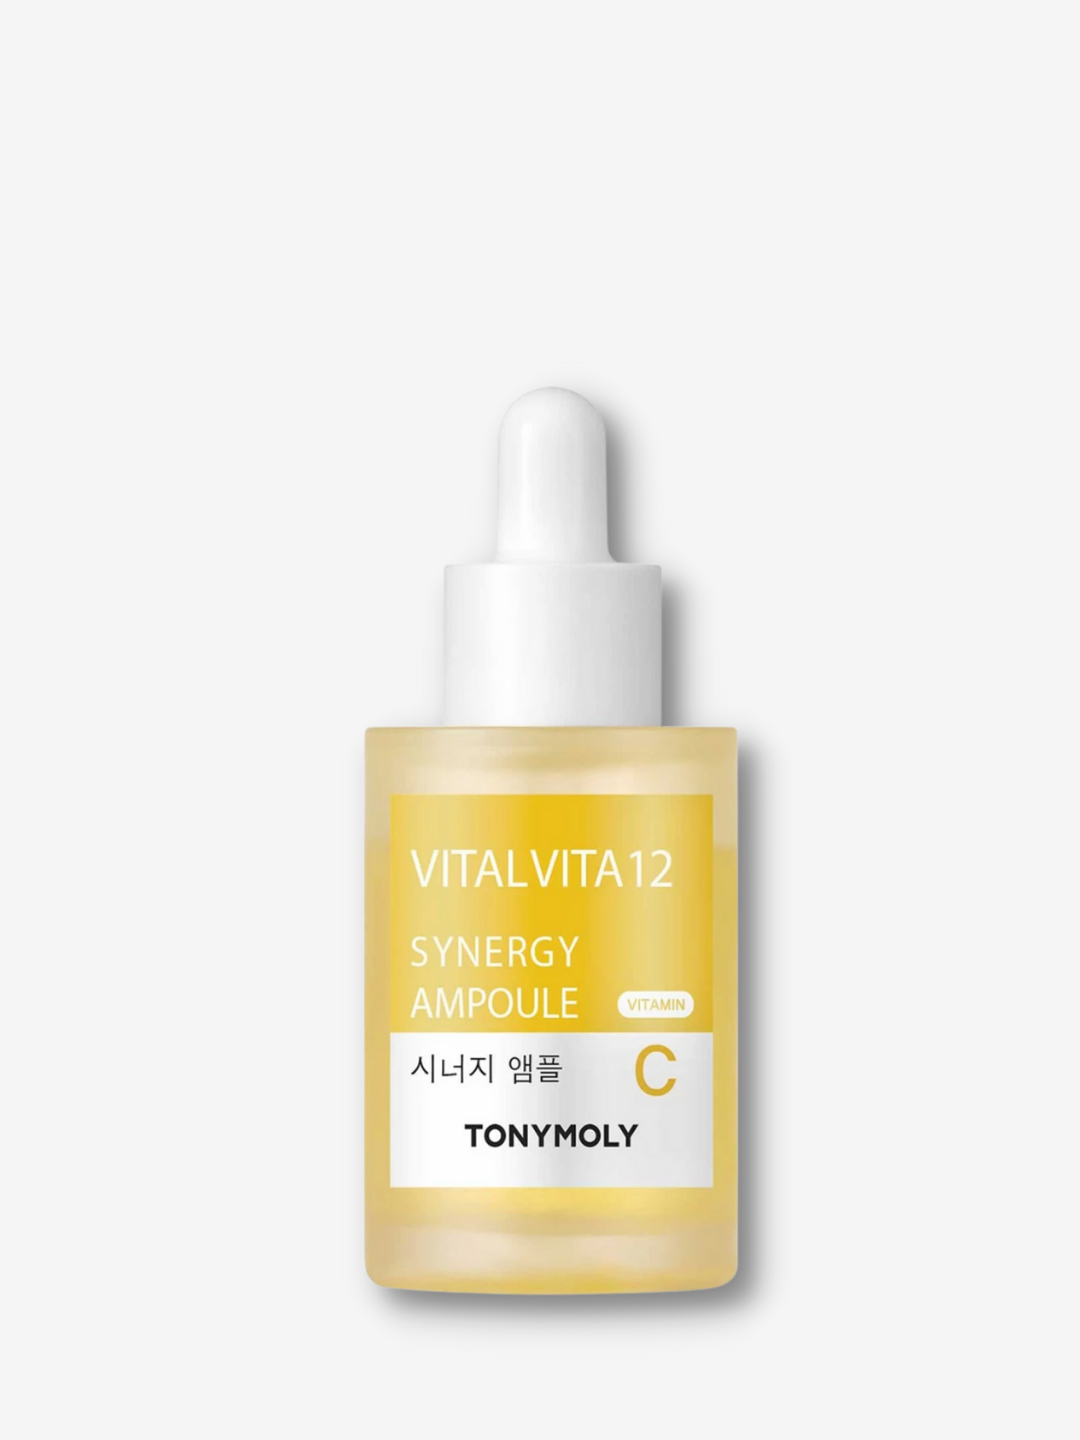 Tonymoly - Vital Vita 12 Synergy Ampoule - 30 ml